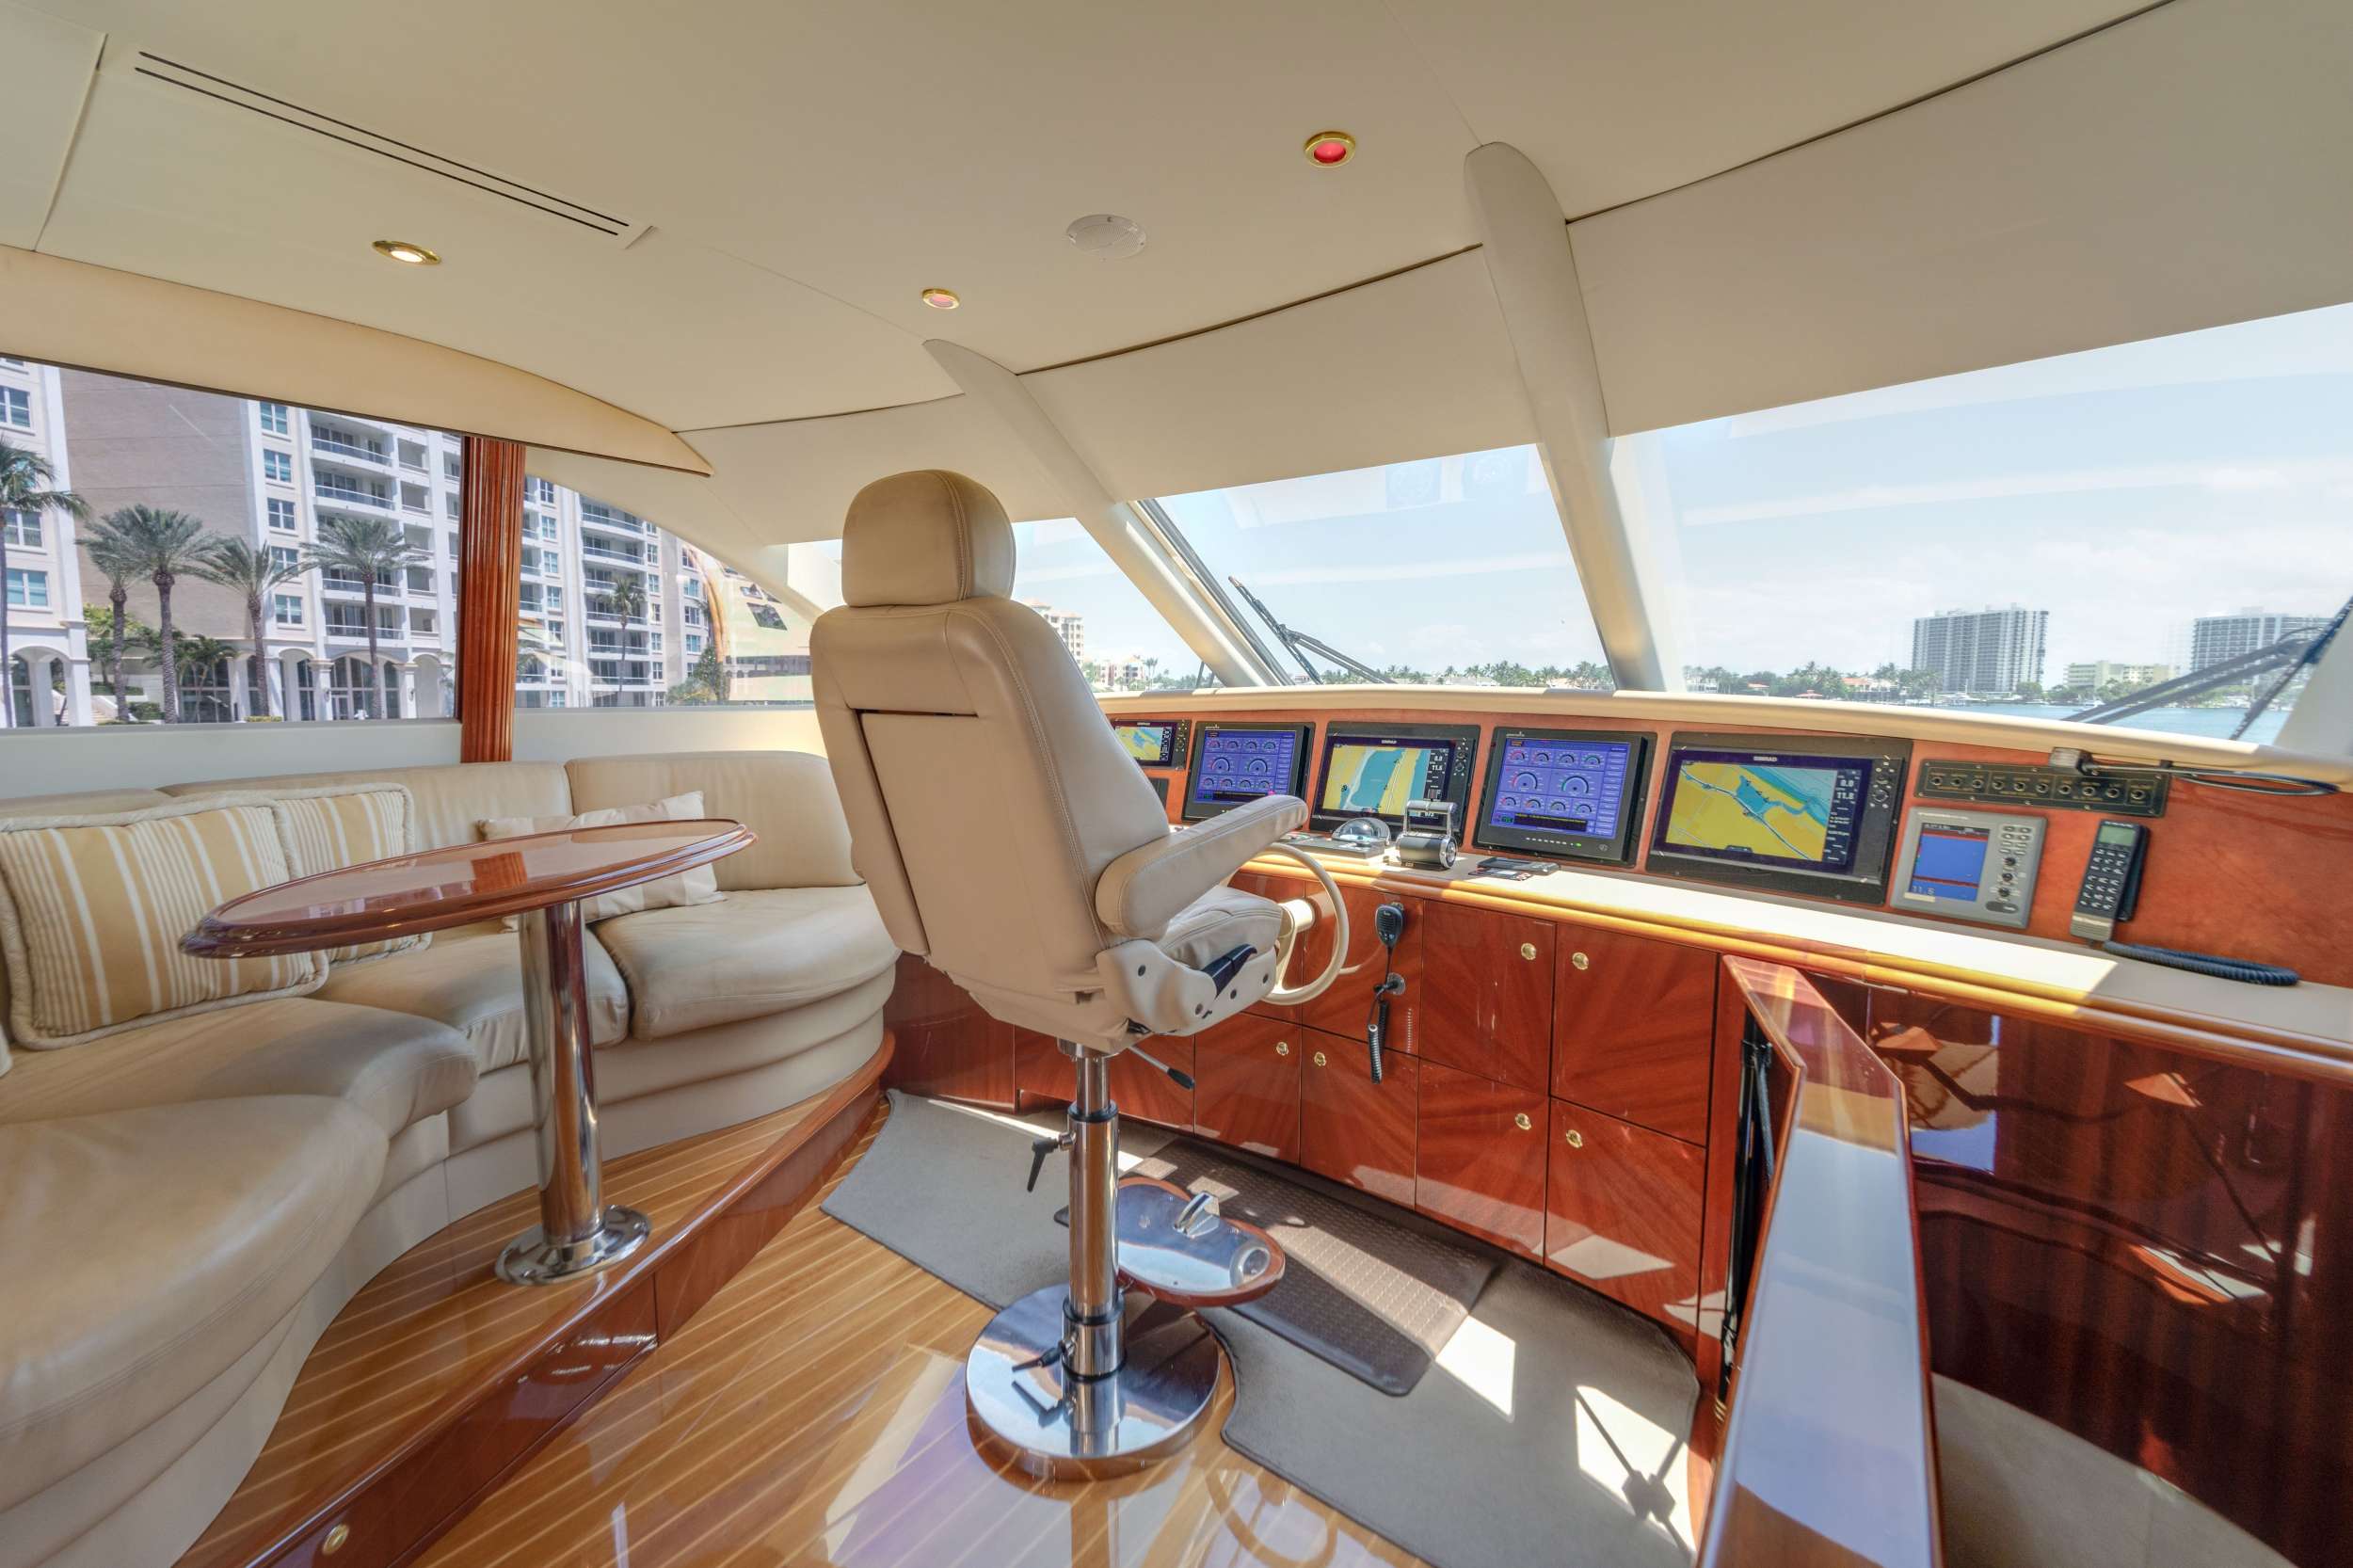 COPAY - Yacht Charter USA & Boat hire in Florida & Bahamas 5